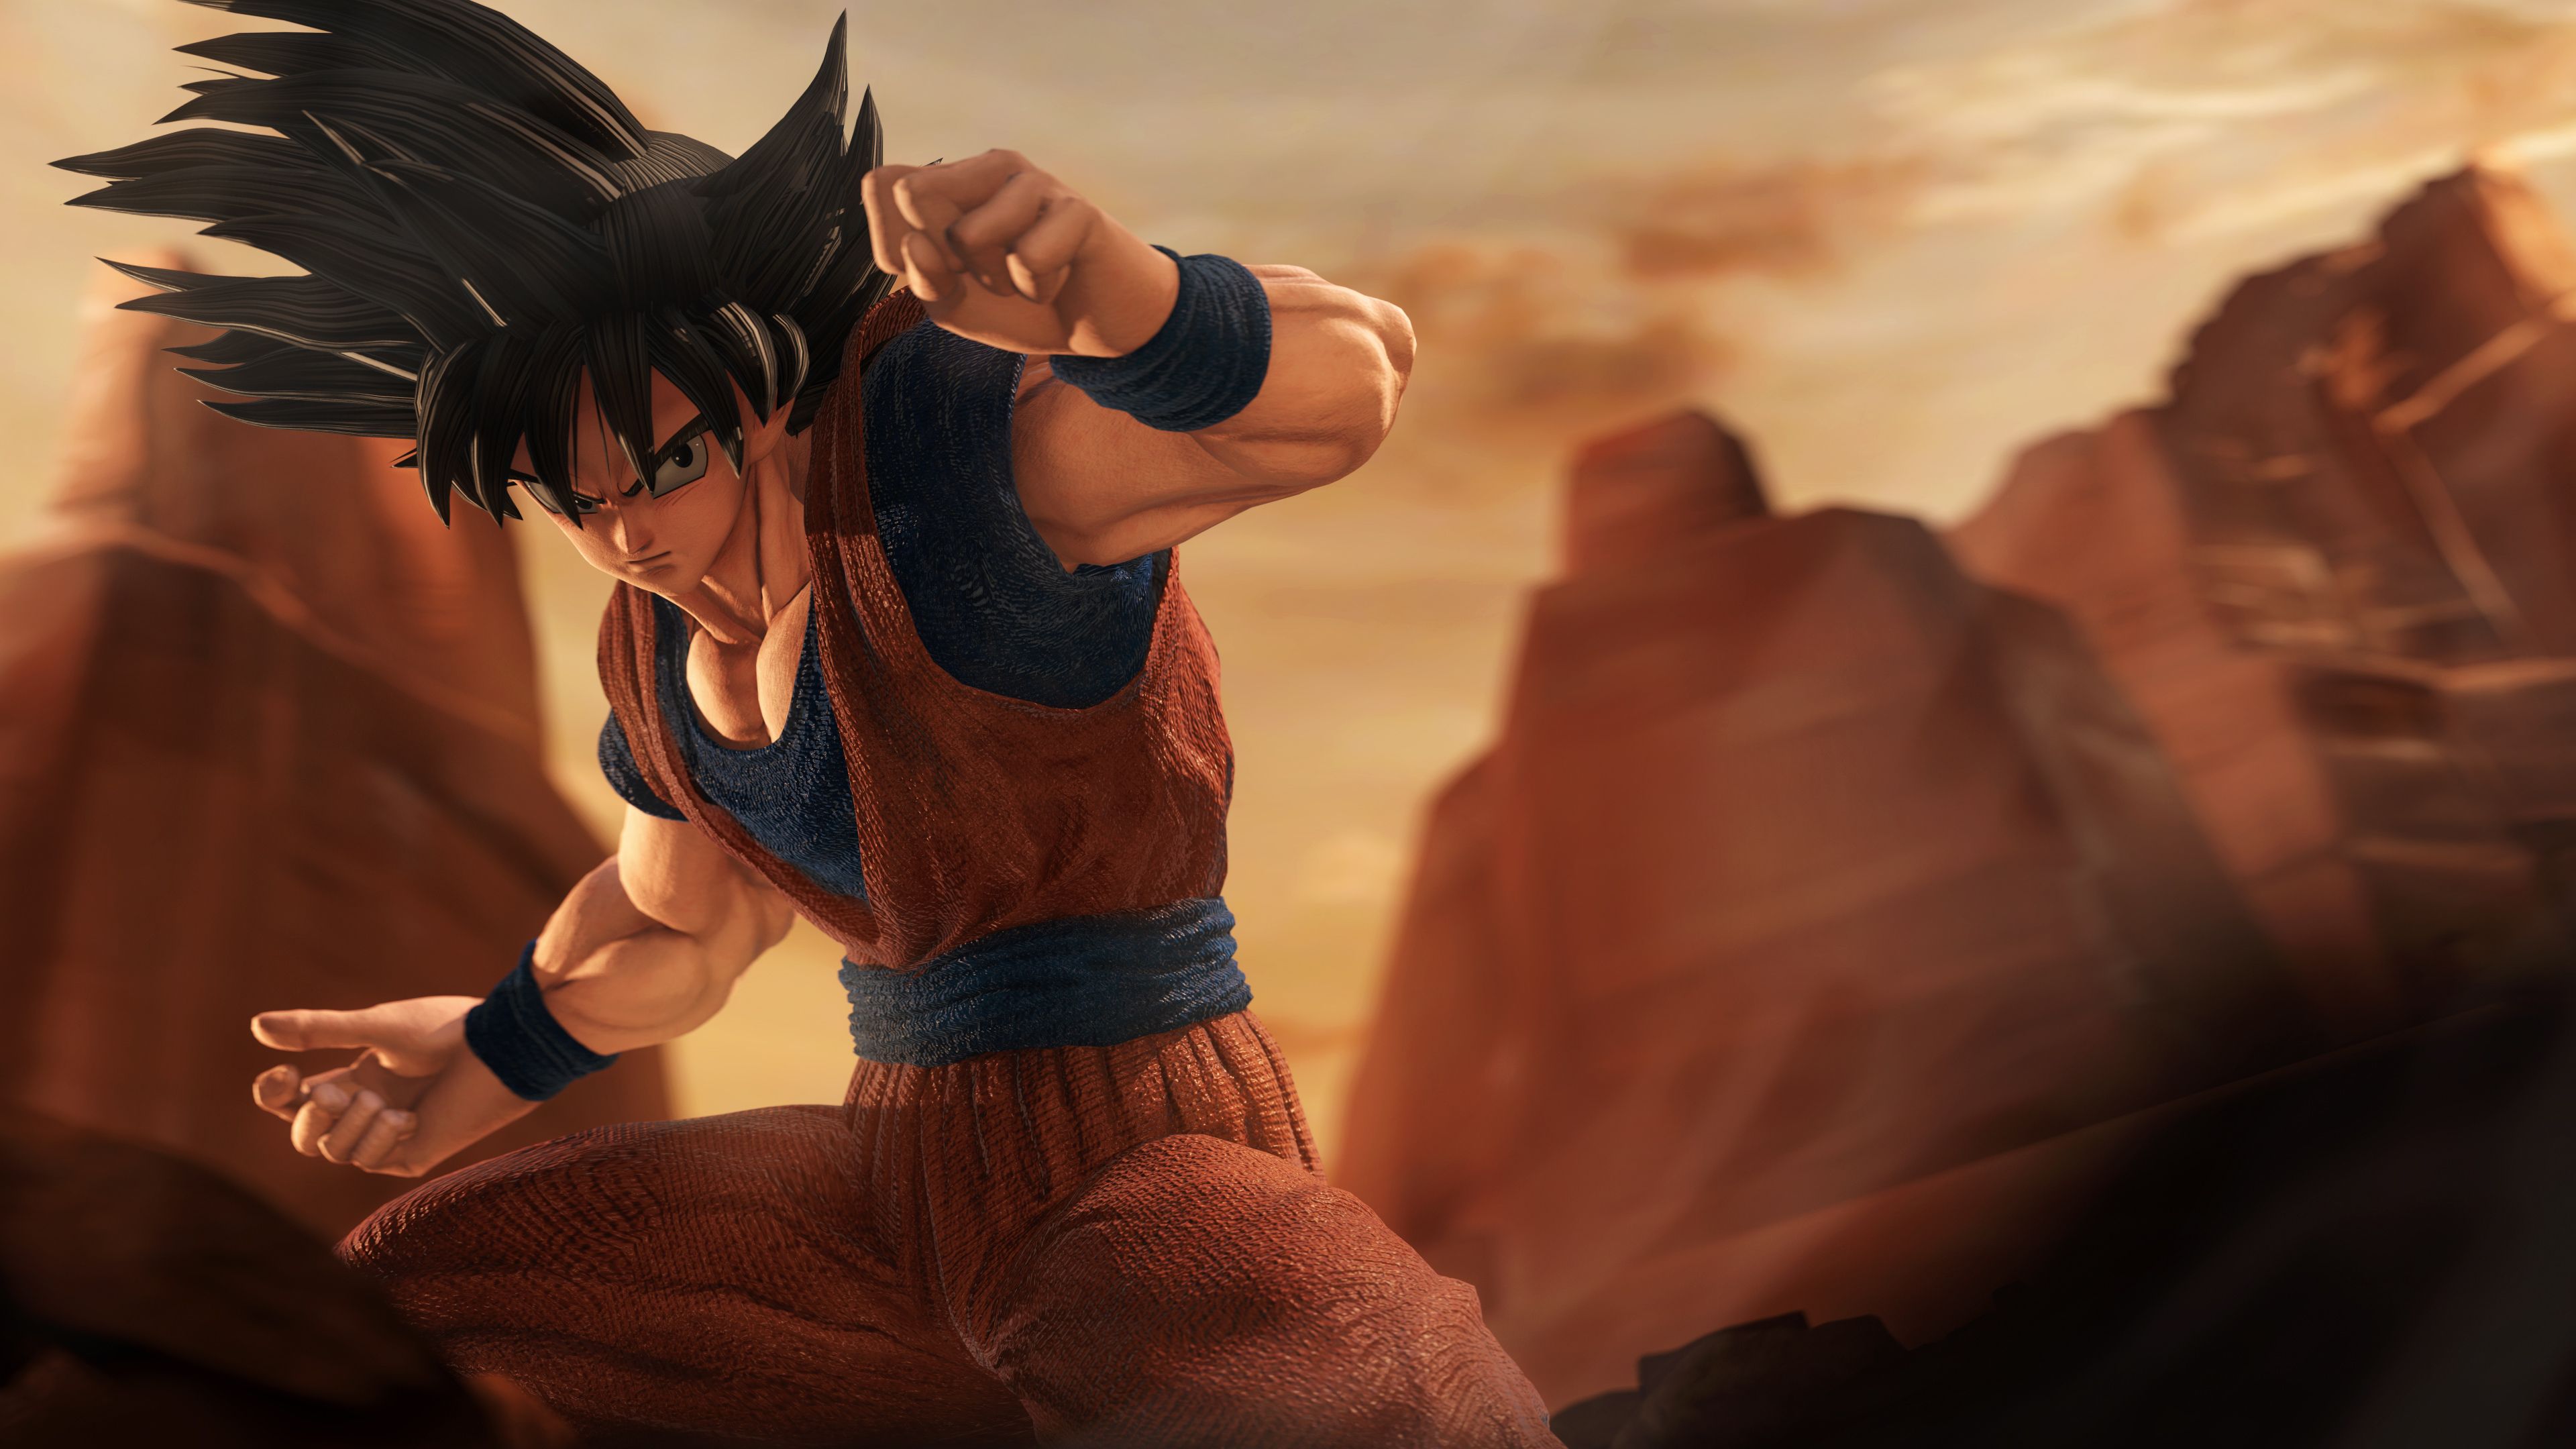 Goku Wallpaper, HD Anime 4K Wallpaper, Image, Photo and Background